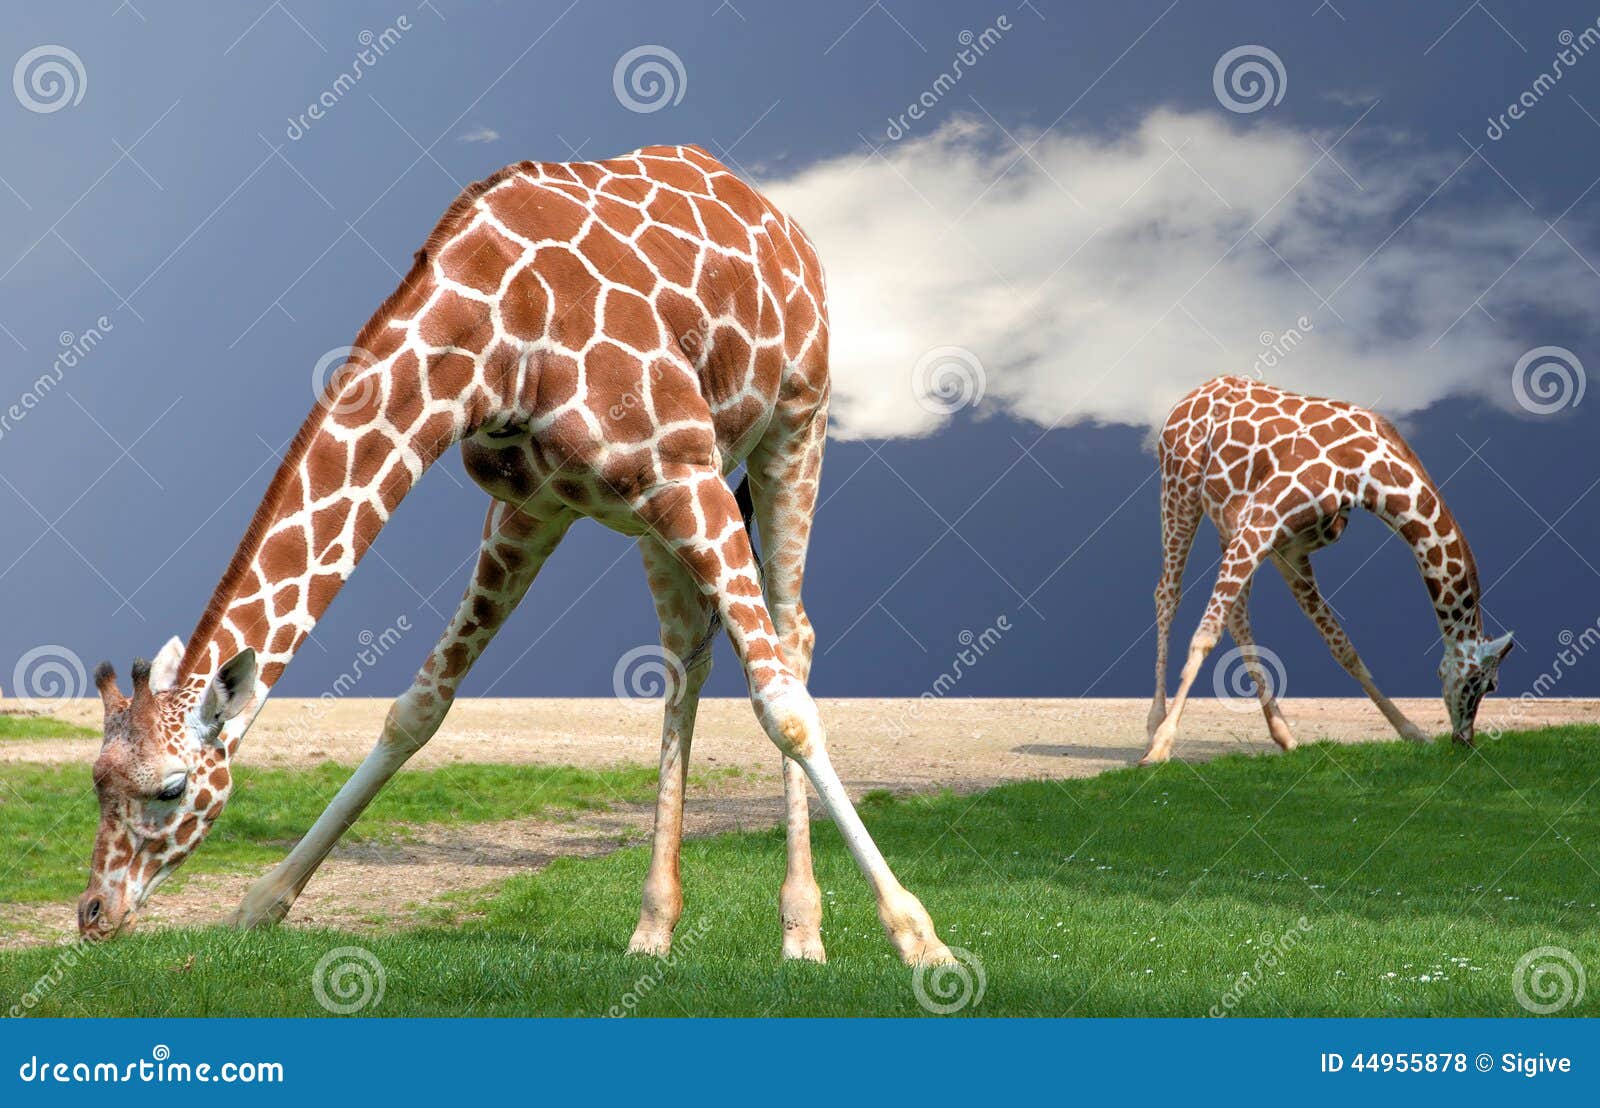 giraffes bending